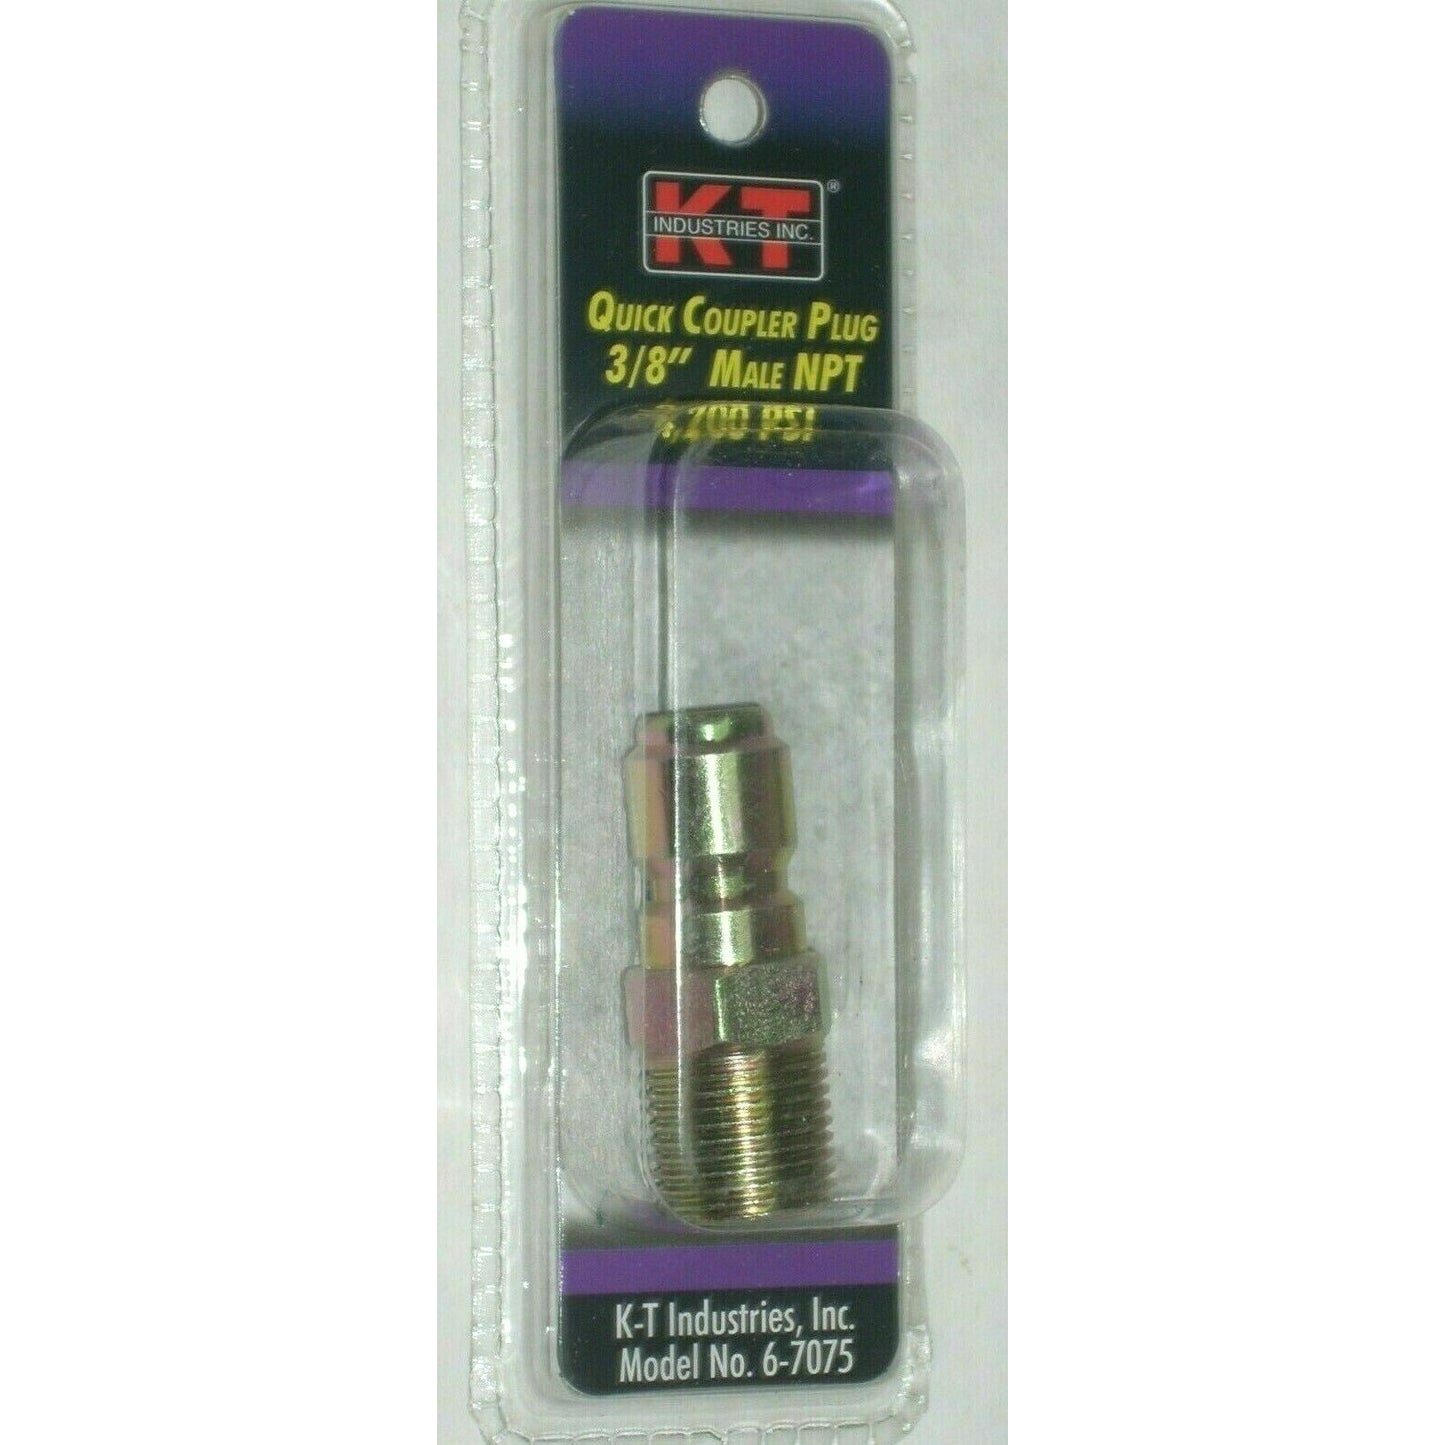 KT Industries 6-7075 Quick Coupler Plug for Pressure Washer 3/8" MNPT 4200PSI